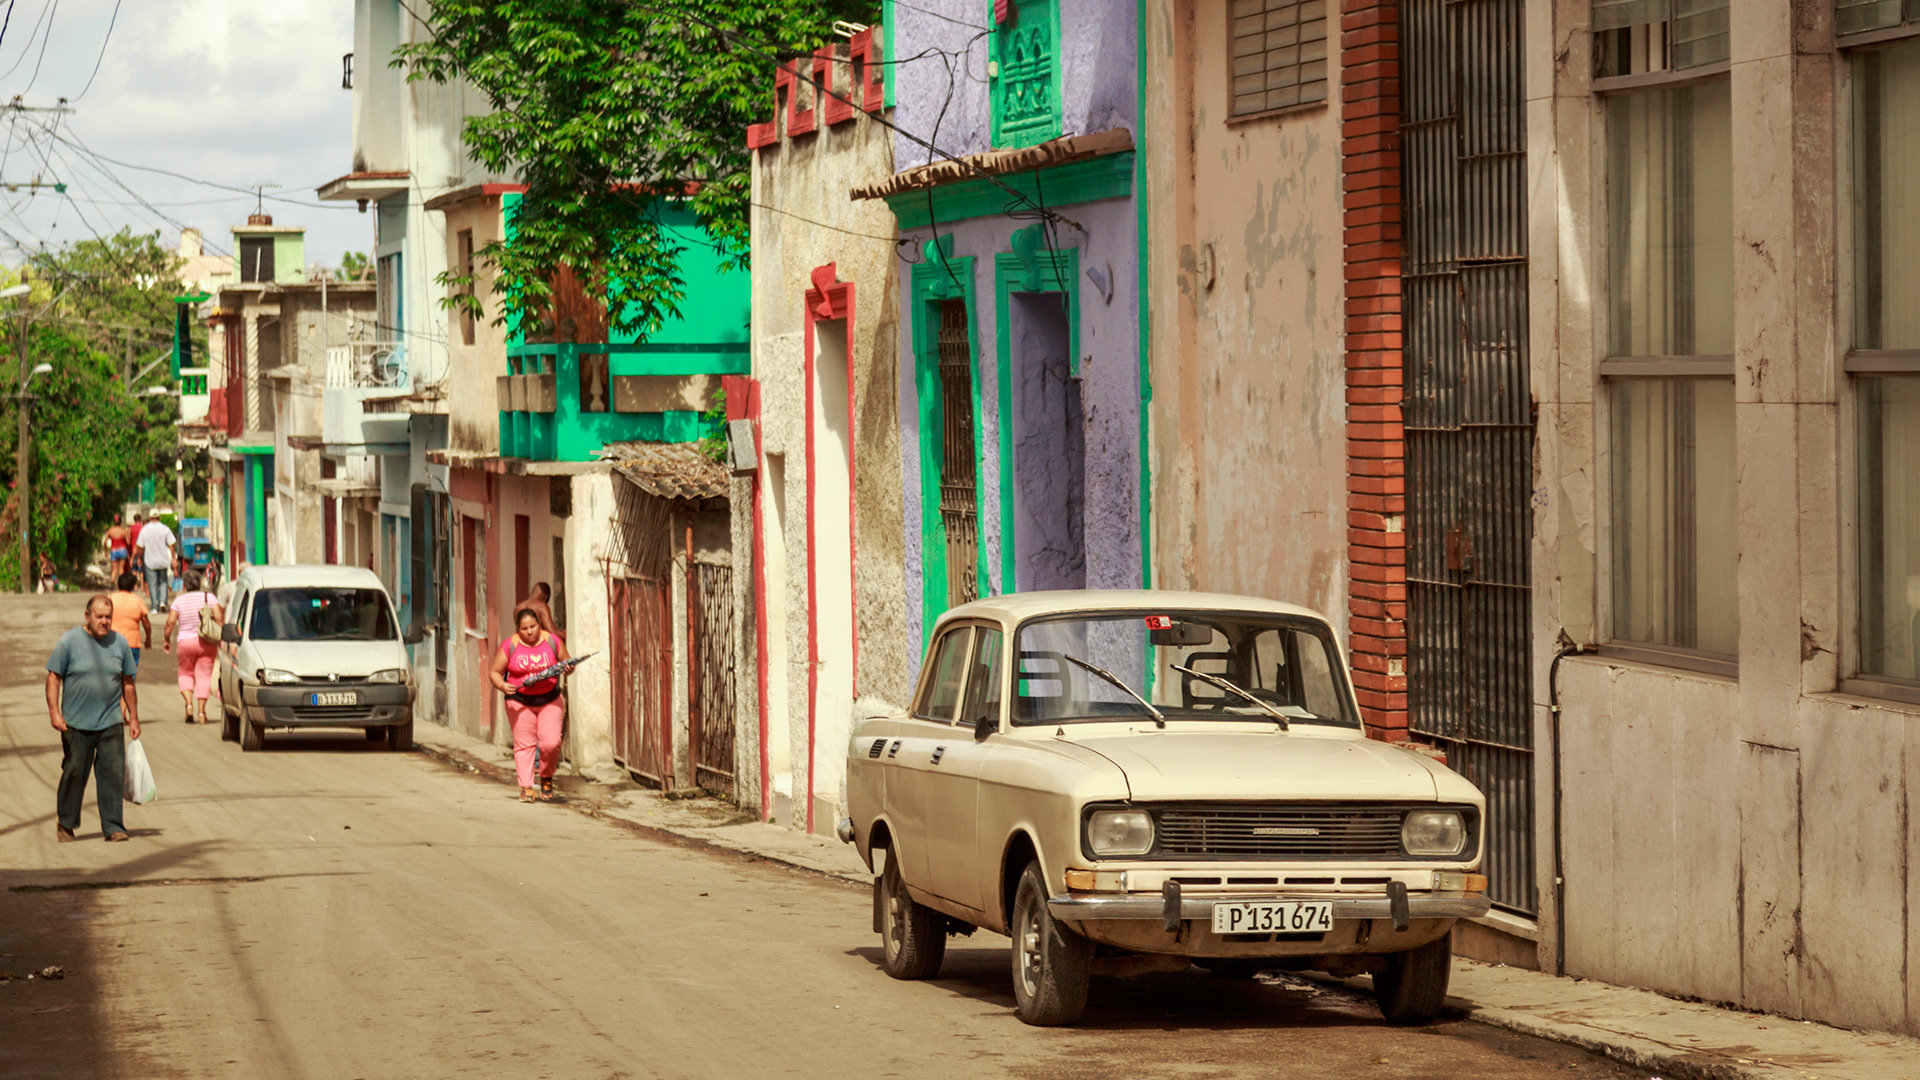 Cuban Culture - The soviet footprint is still fresh